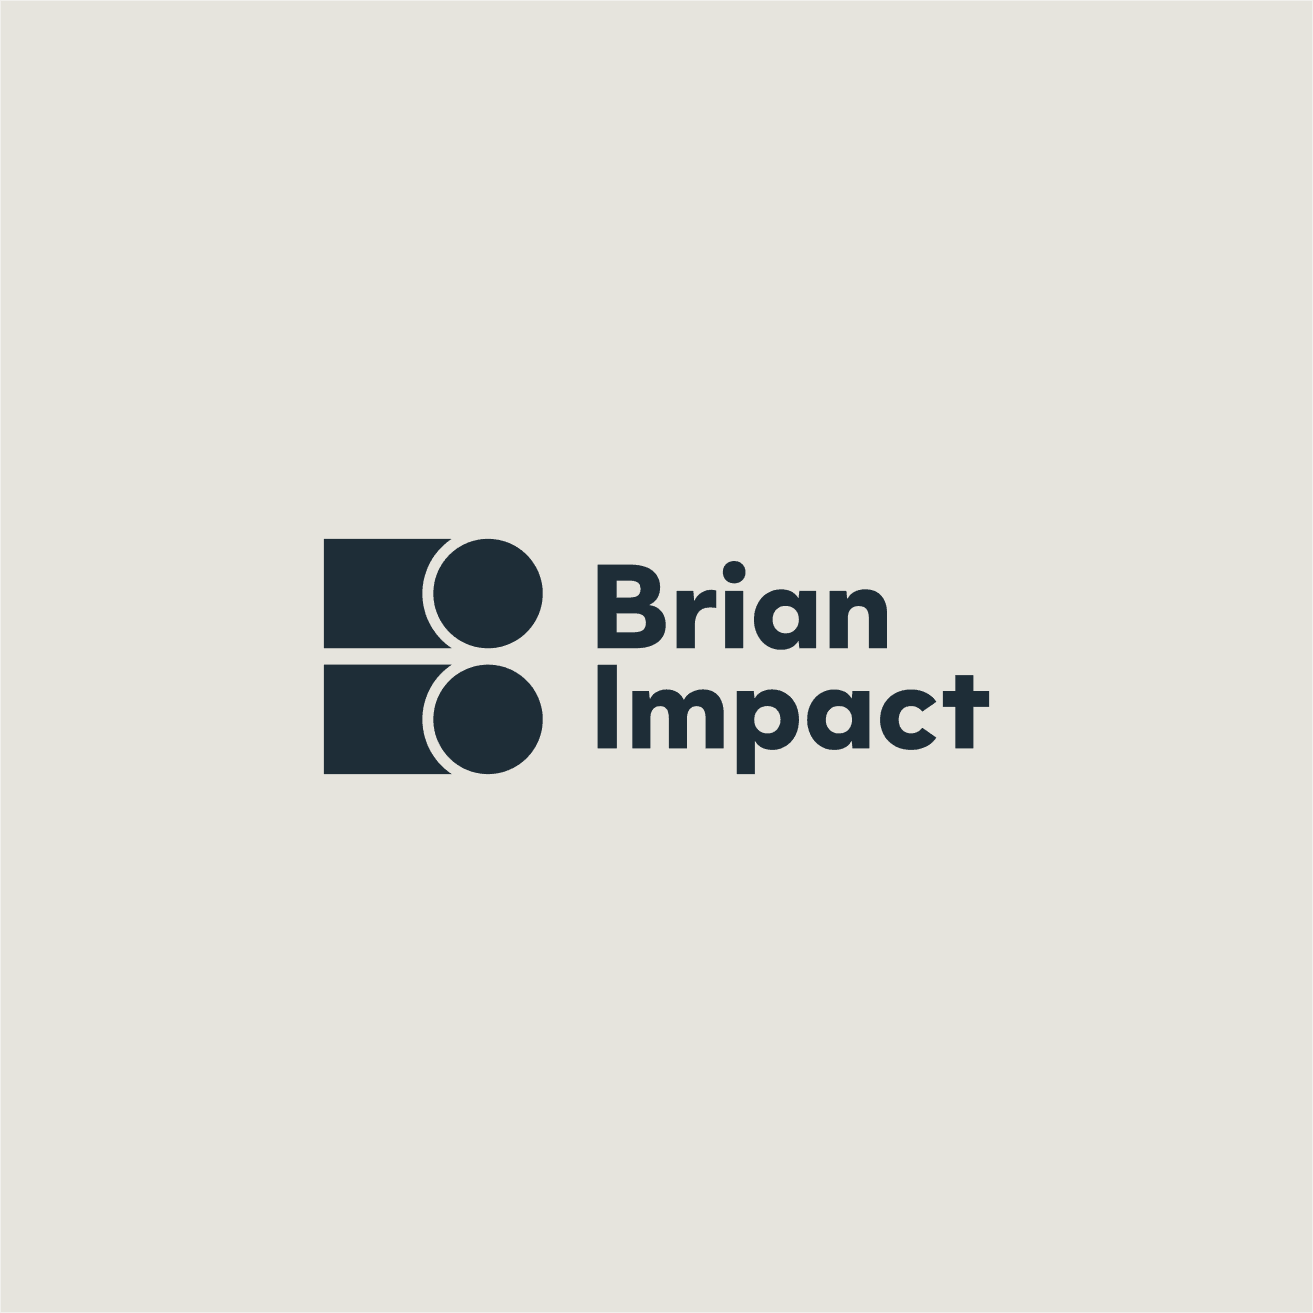 Brian Impact logo image